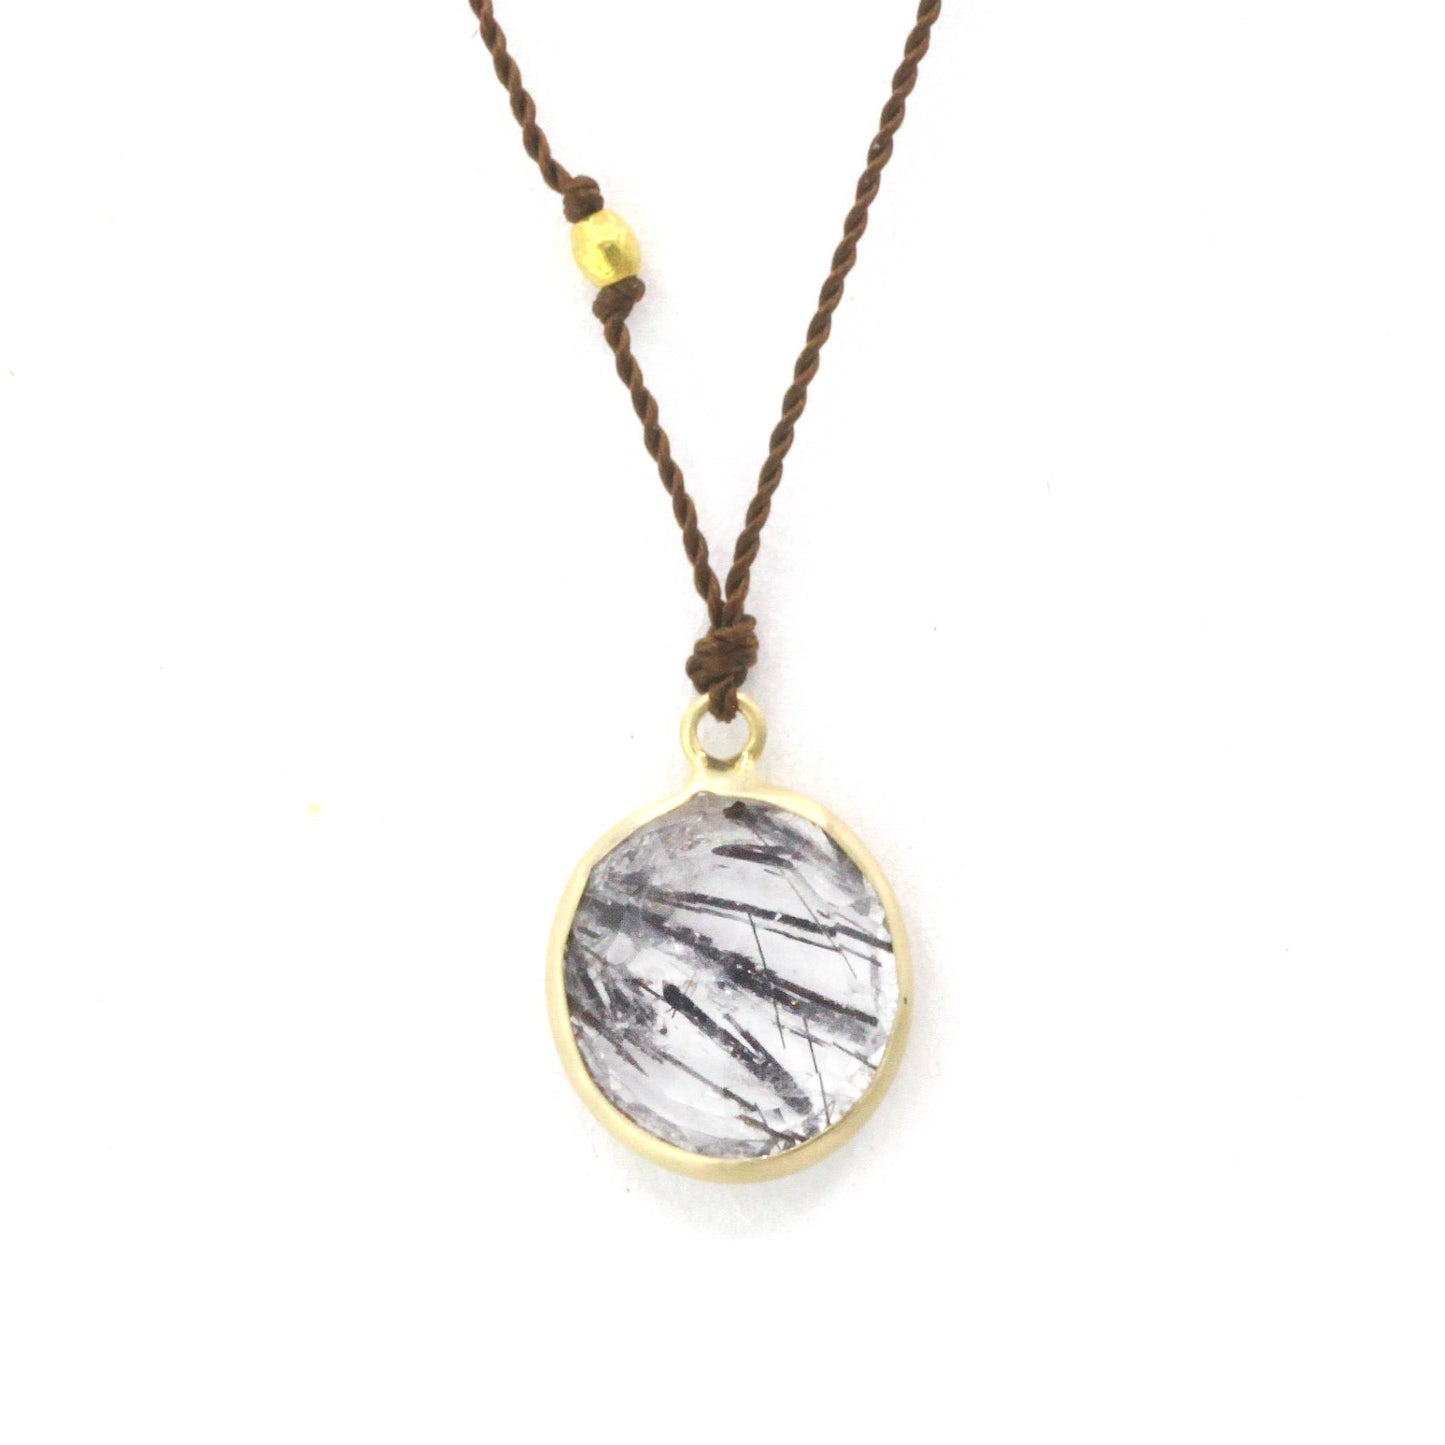 Margaret Solow Jewelry | Tourmalated Quartz + 14k Gold Drop Necklace | Firecracker